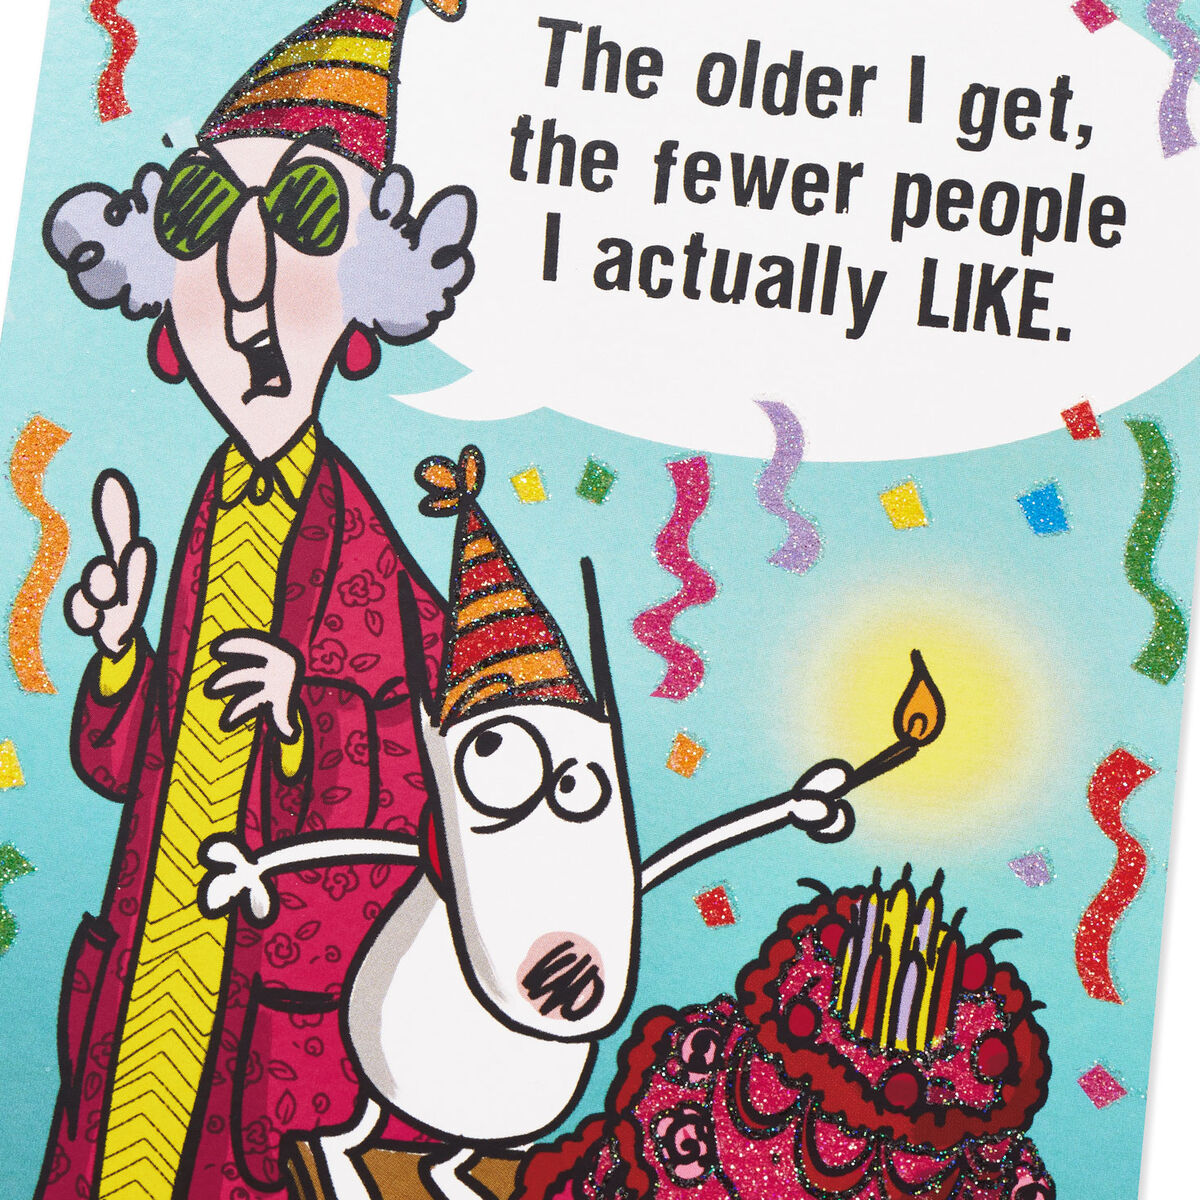 Free Funny Printable Birthday Cards